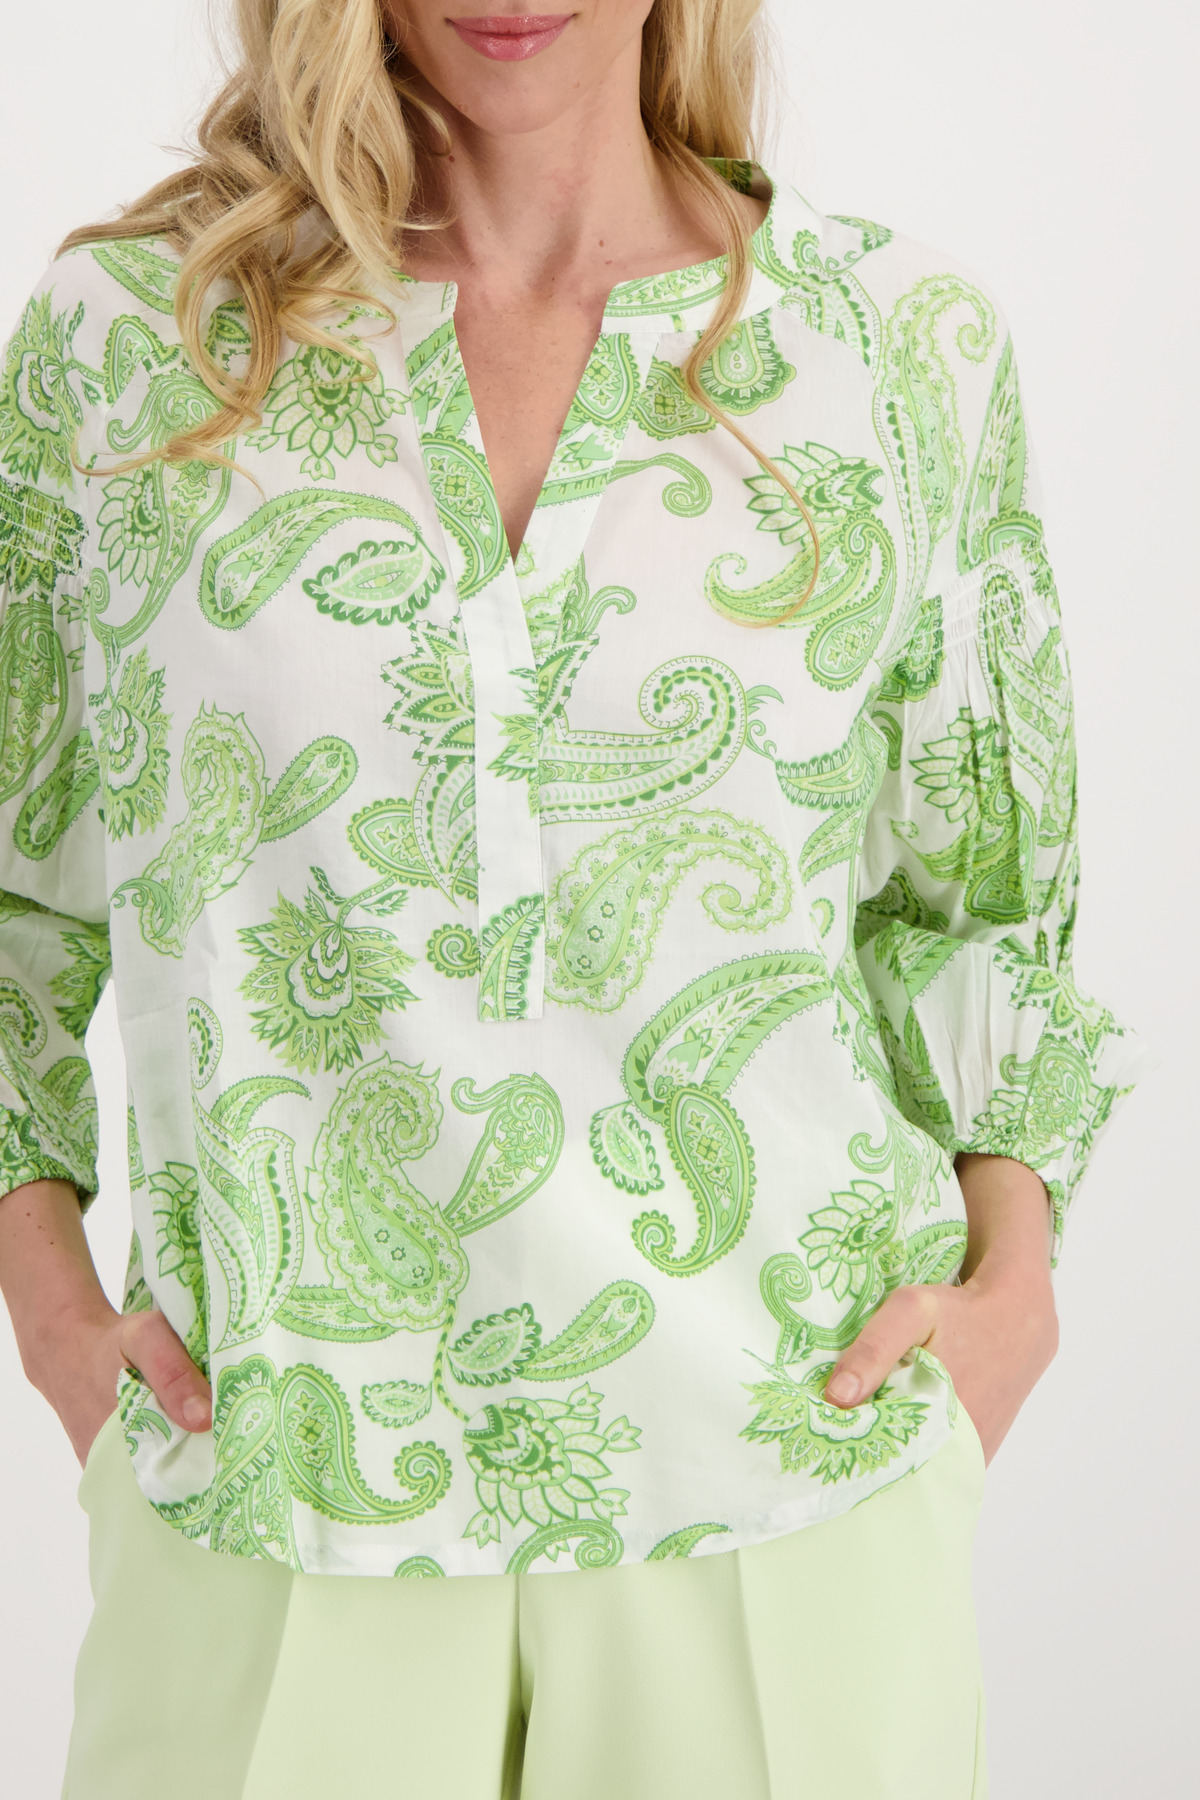 Monari Bluse, pastell gemustert Hartmann Mode Shop - green